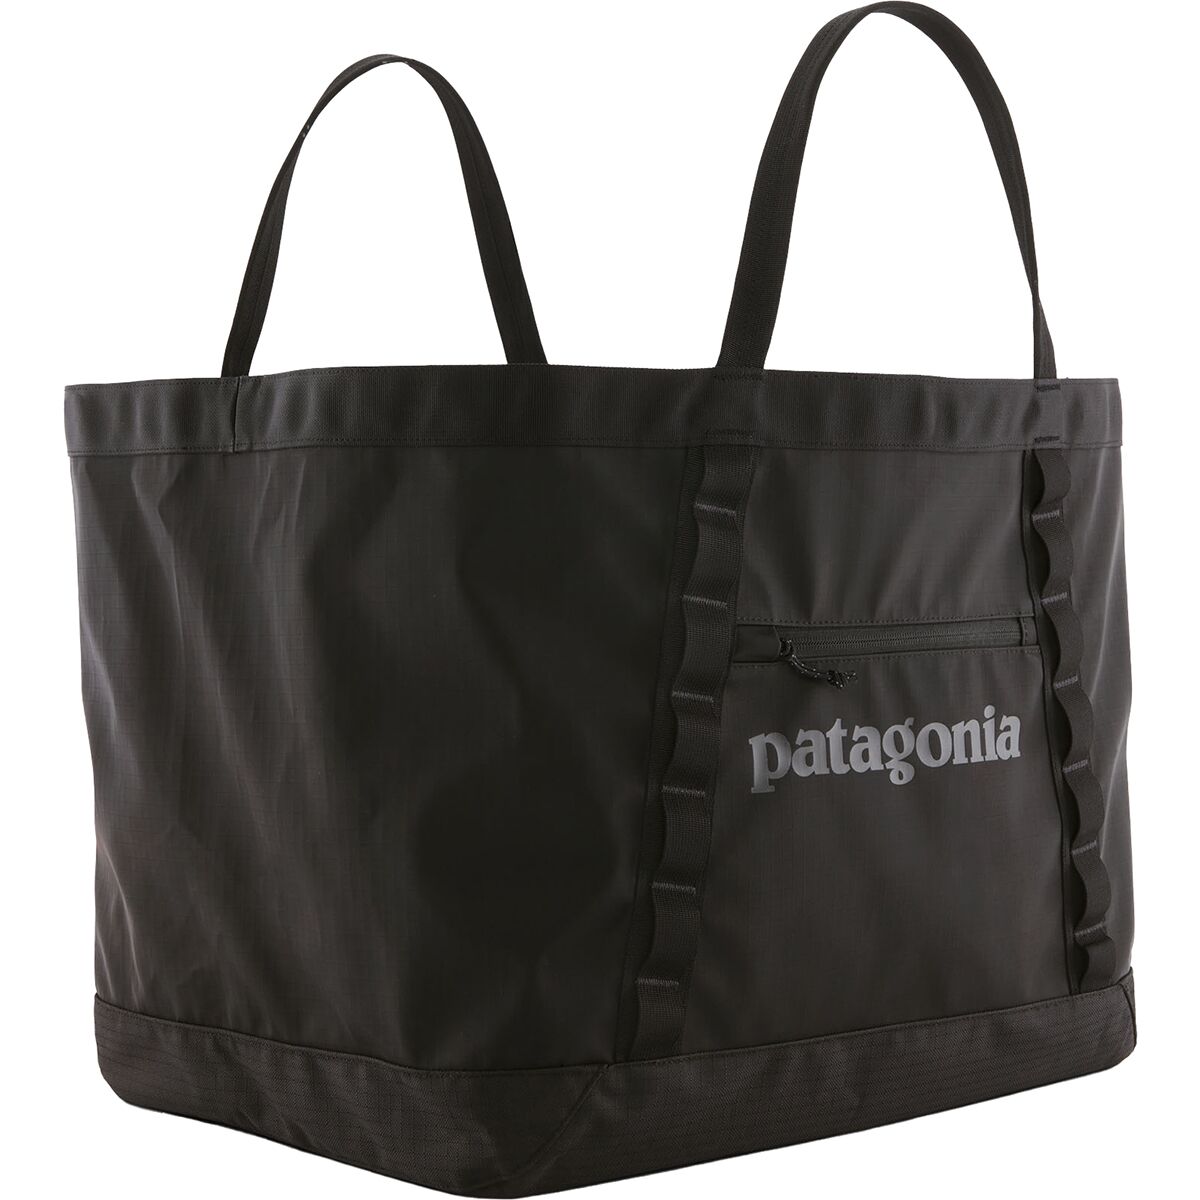 Сумка-тоут black hole gear Patagonia, черный сумка ki7149p39 asseni mini tote p39 black noir